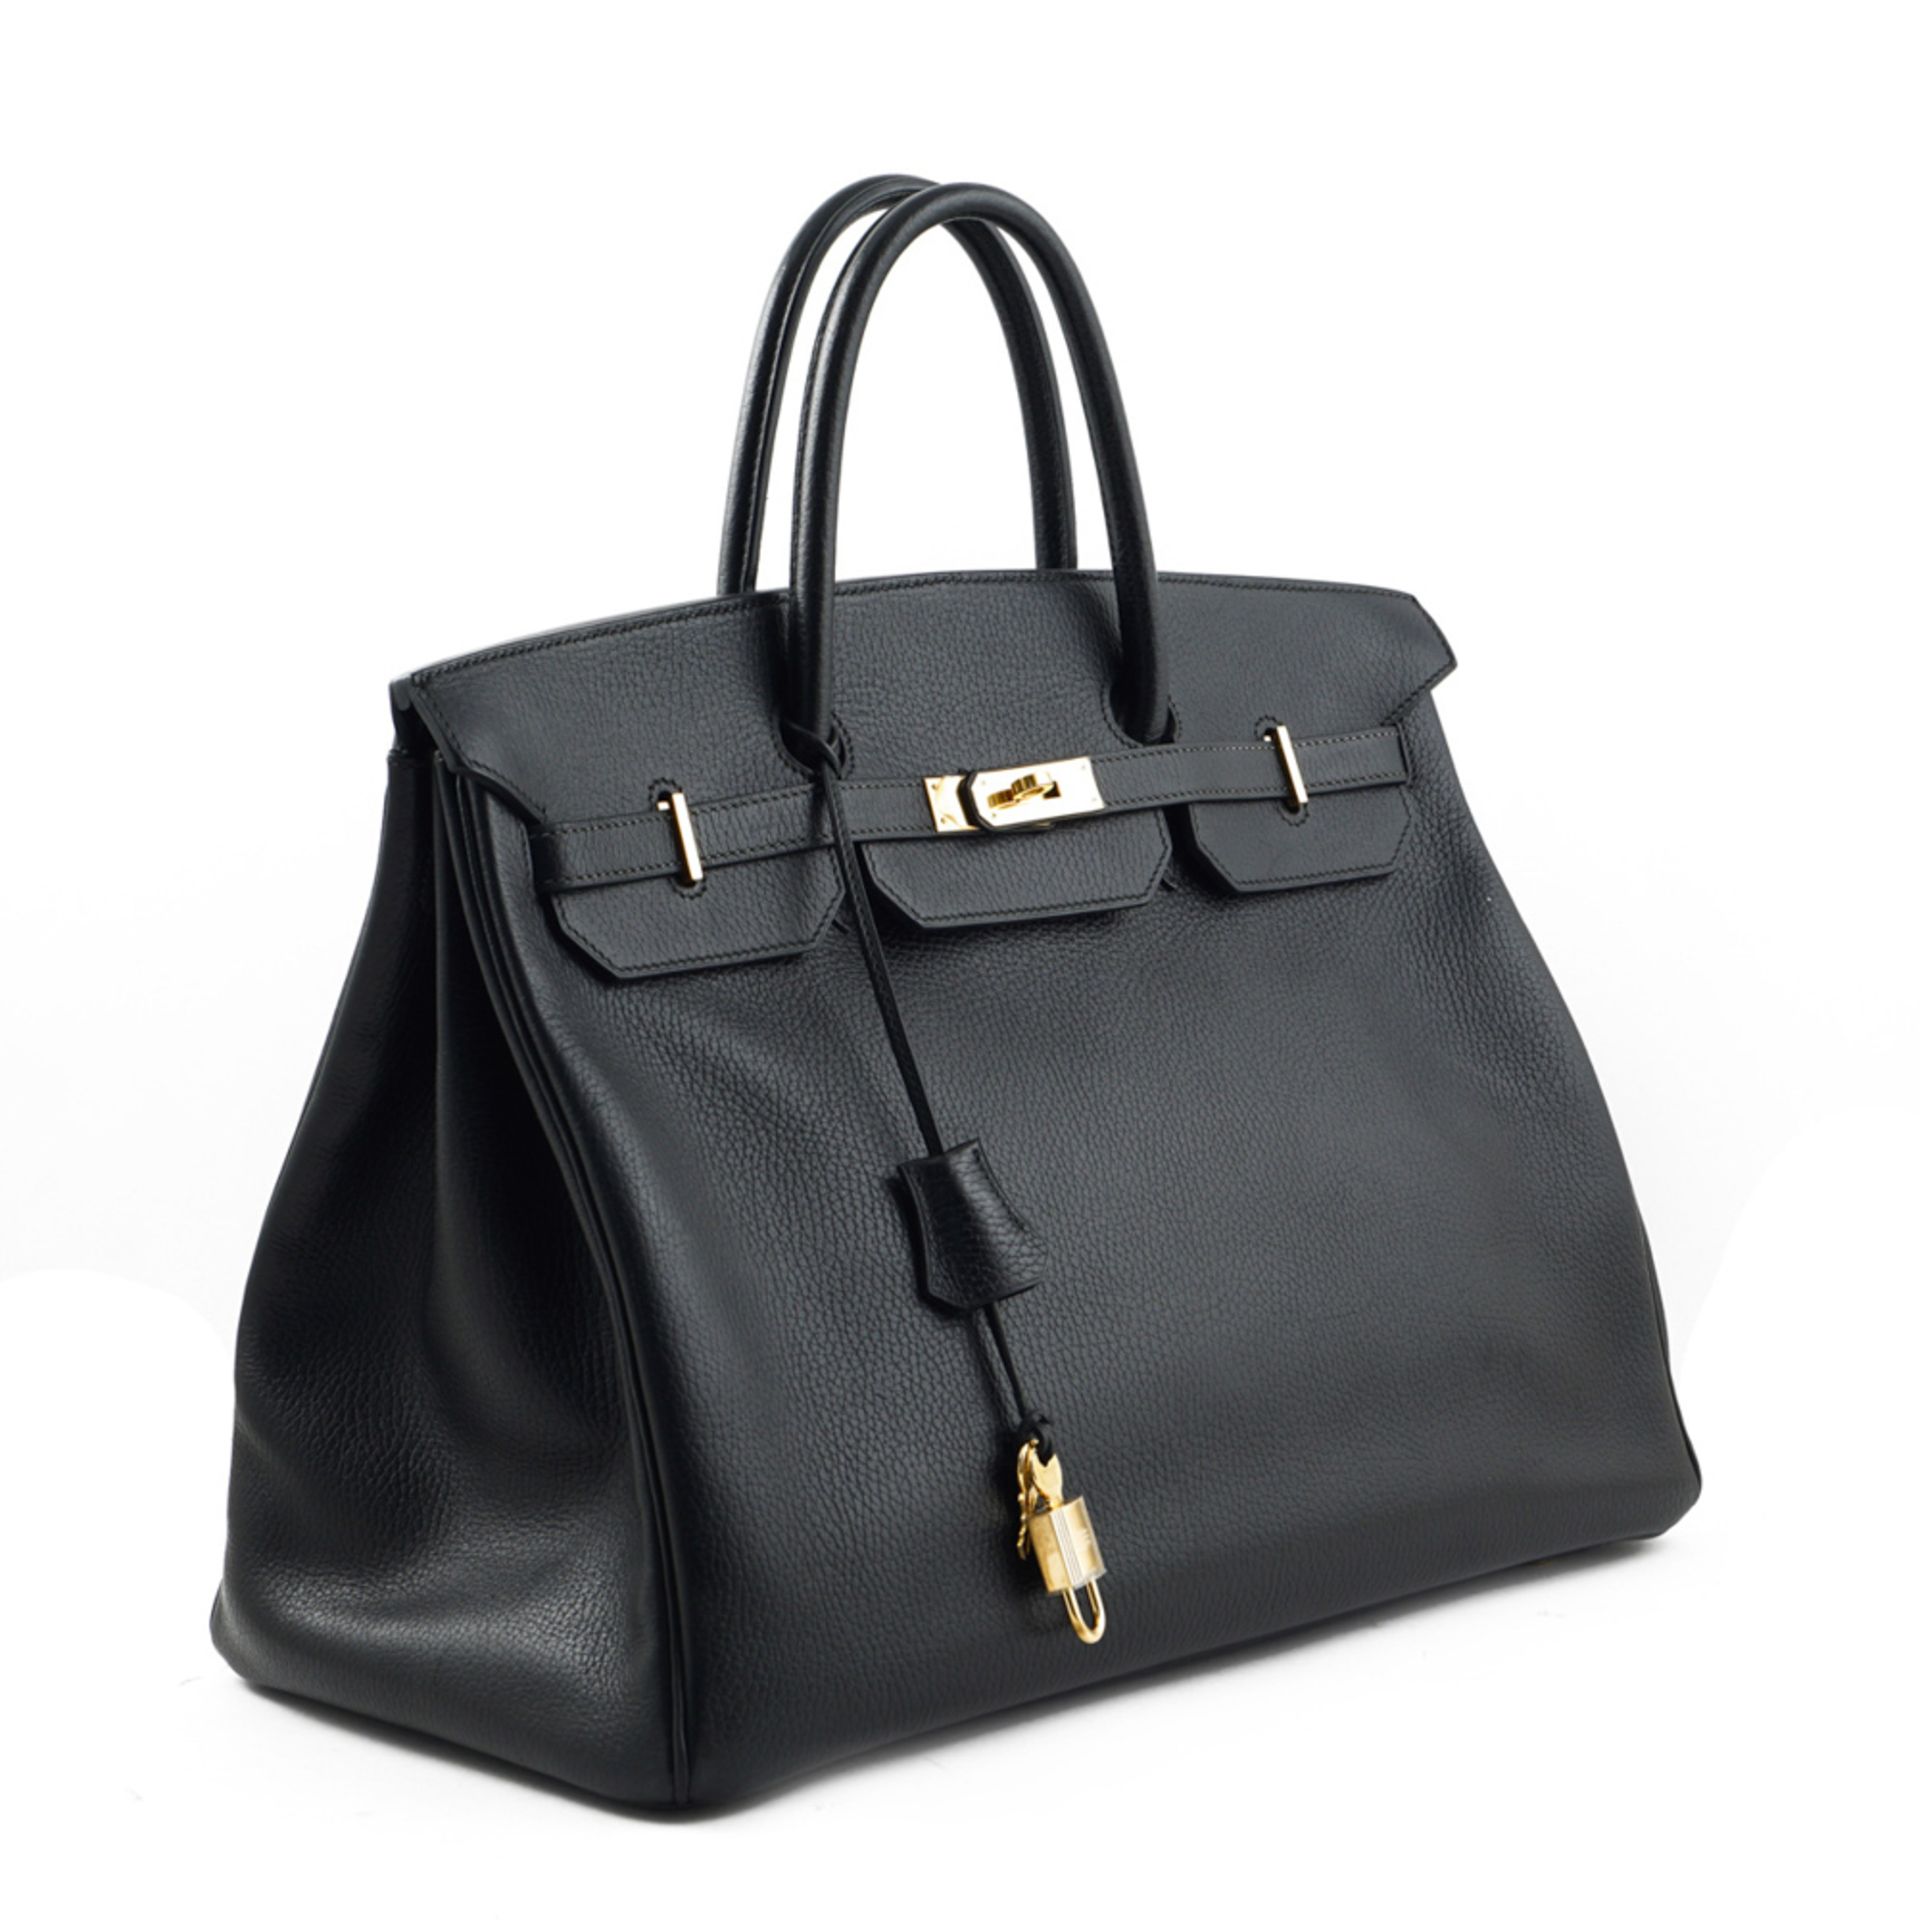 Hermès Birkin 40, hand bag 2000s 28x40x20 cm. - Image 3 of 6